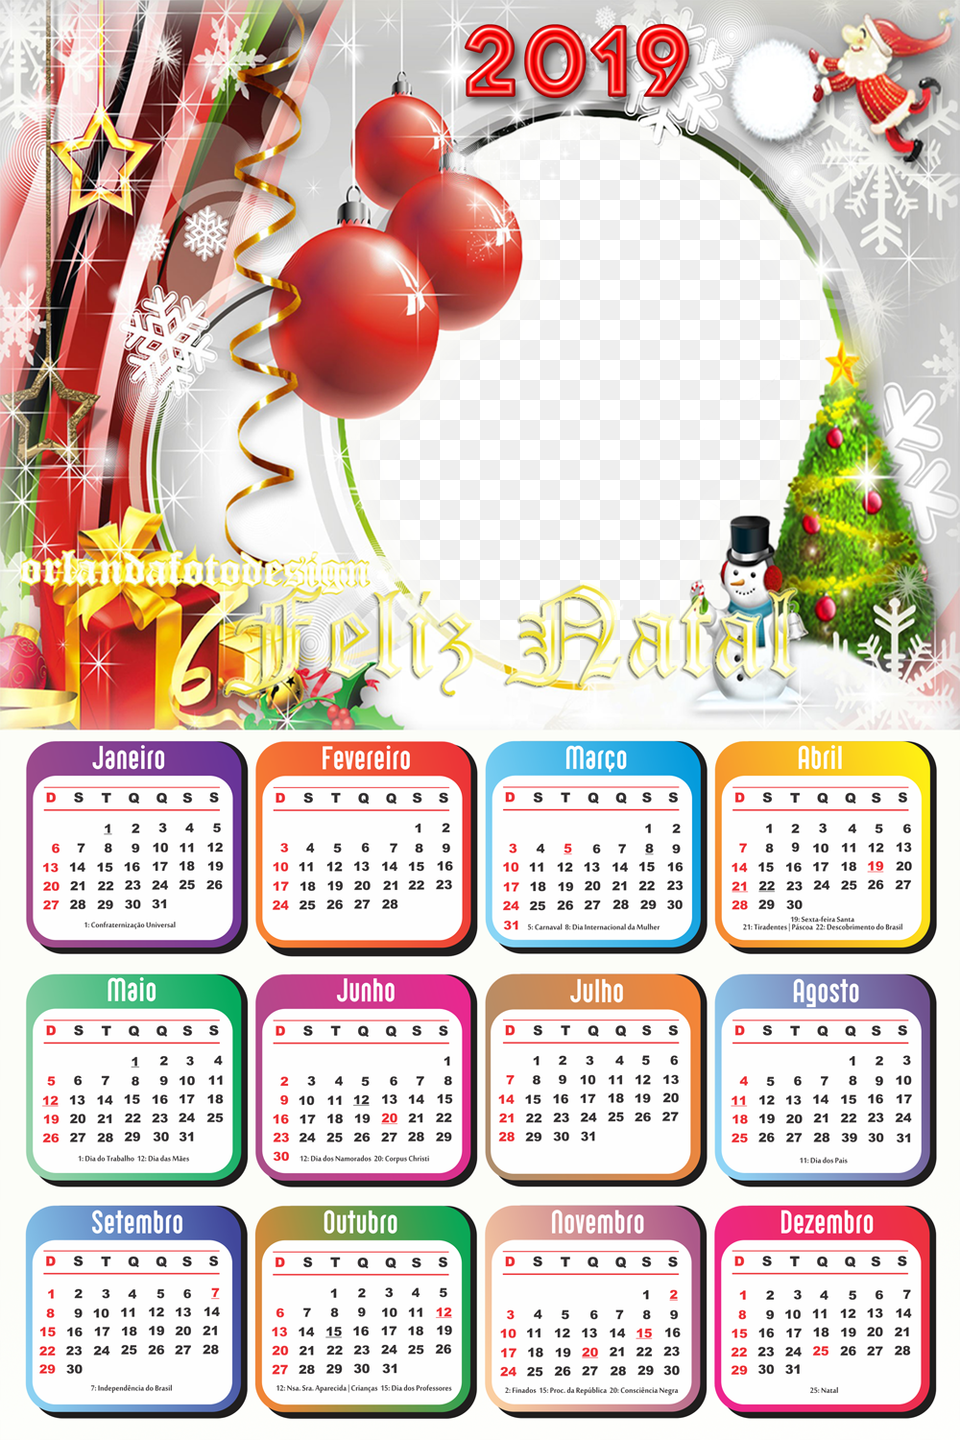 Soy Luna 4 2019, Text, Calendar, Balloon, Baby Png